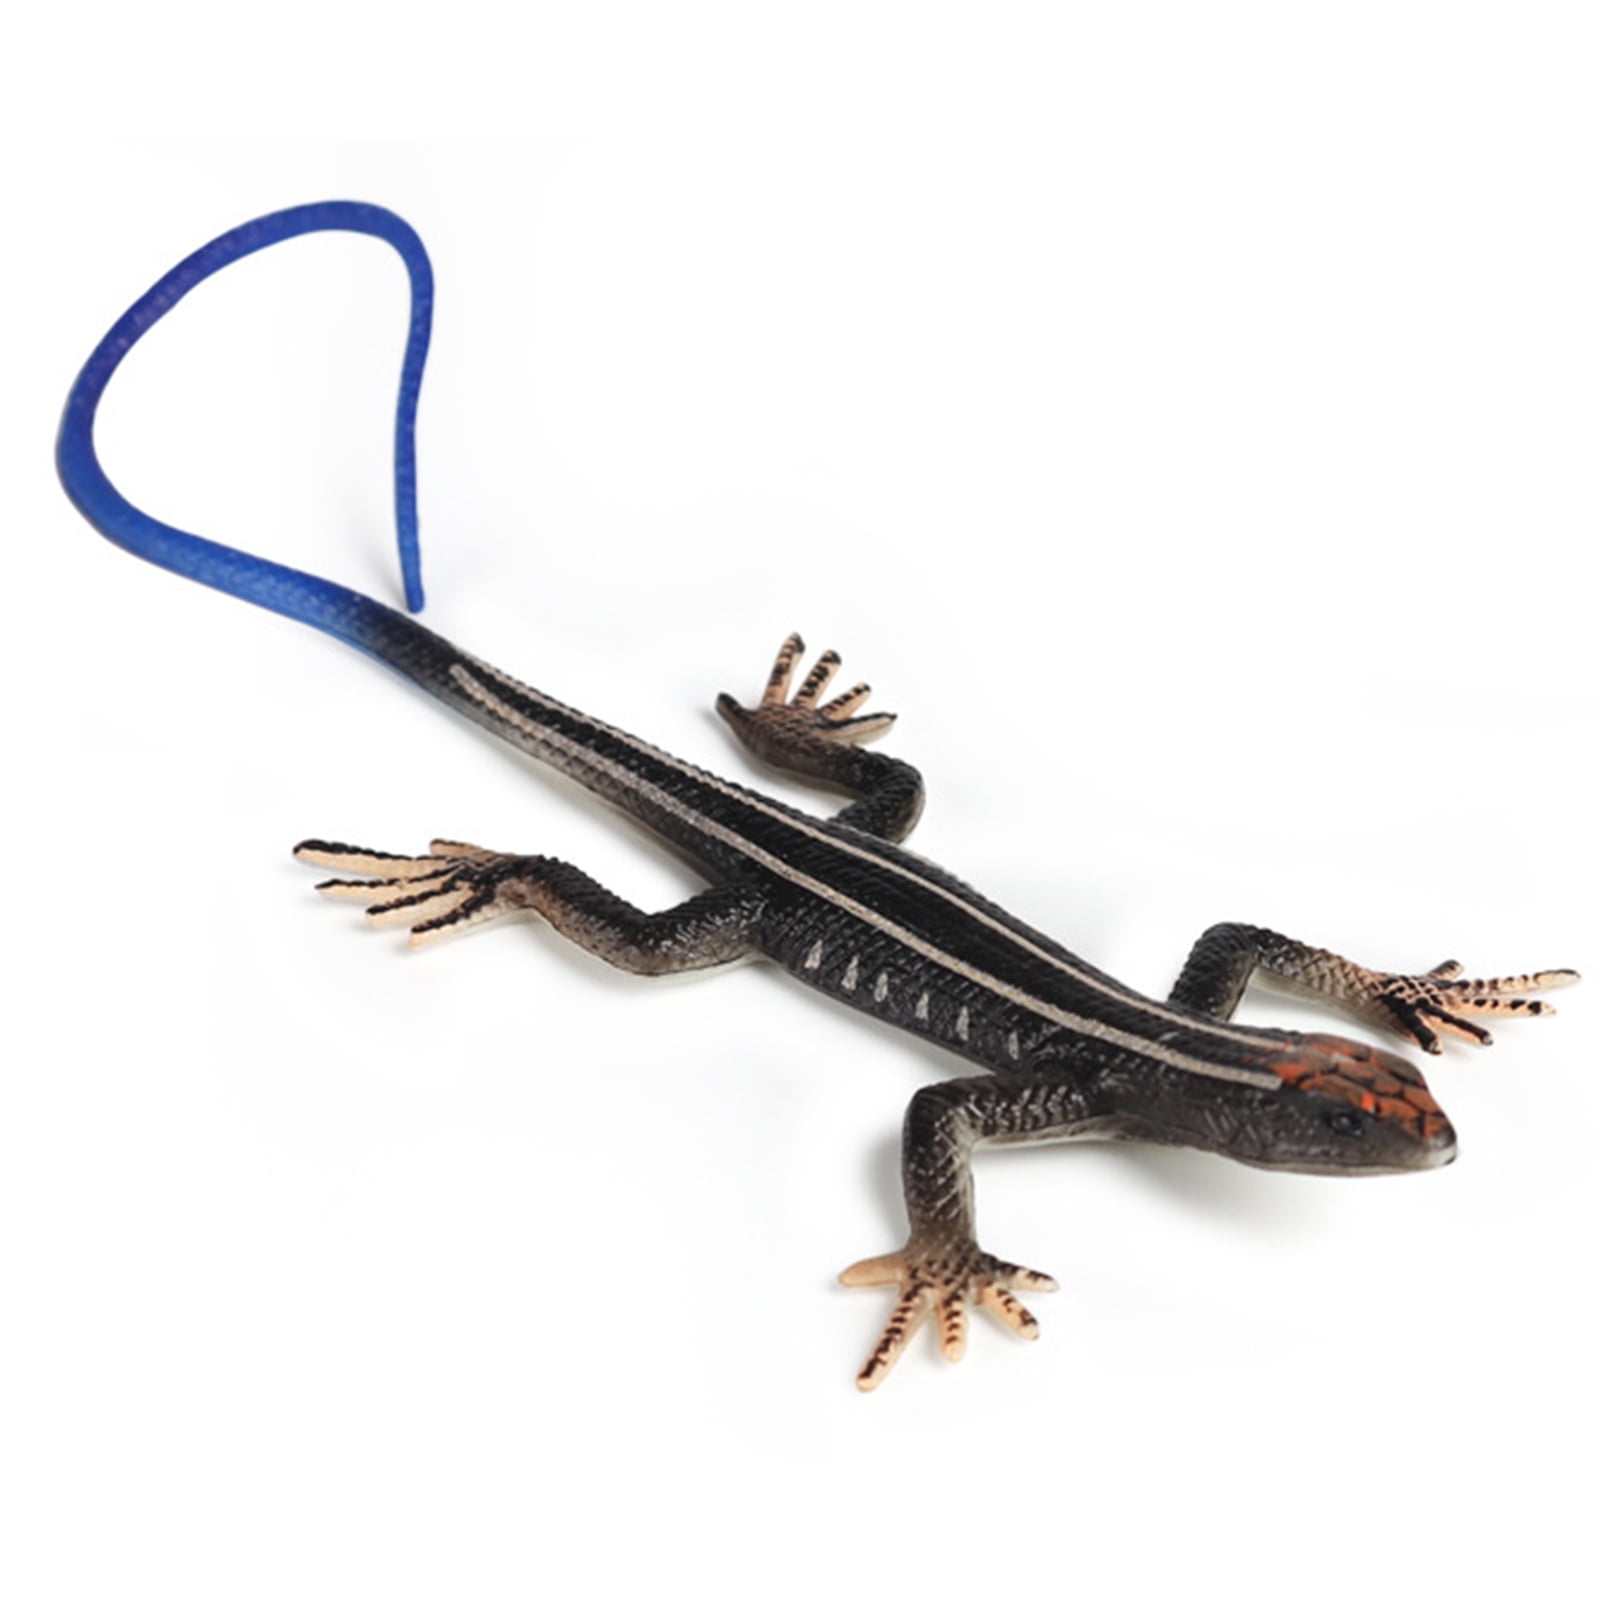 Cuteam Lizard Model,Artificial Lizard Fadeless Vivid Colorful Reptile ...